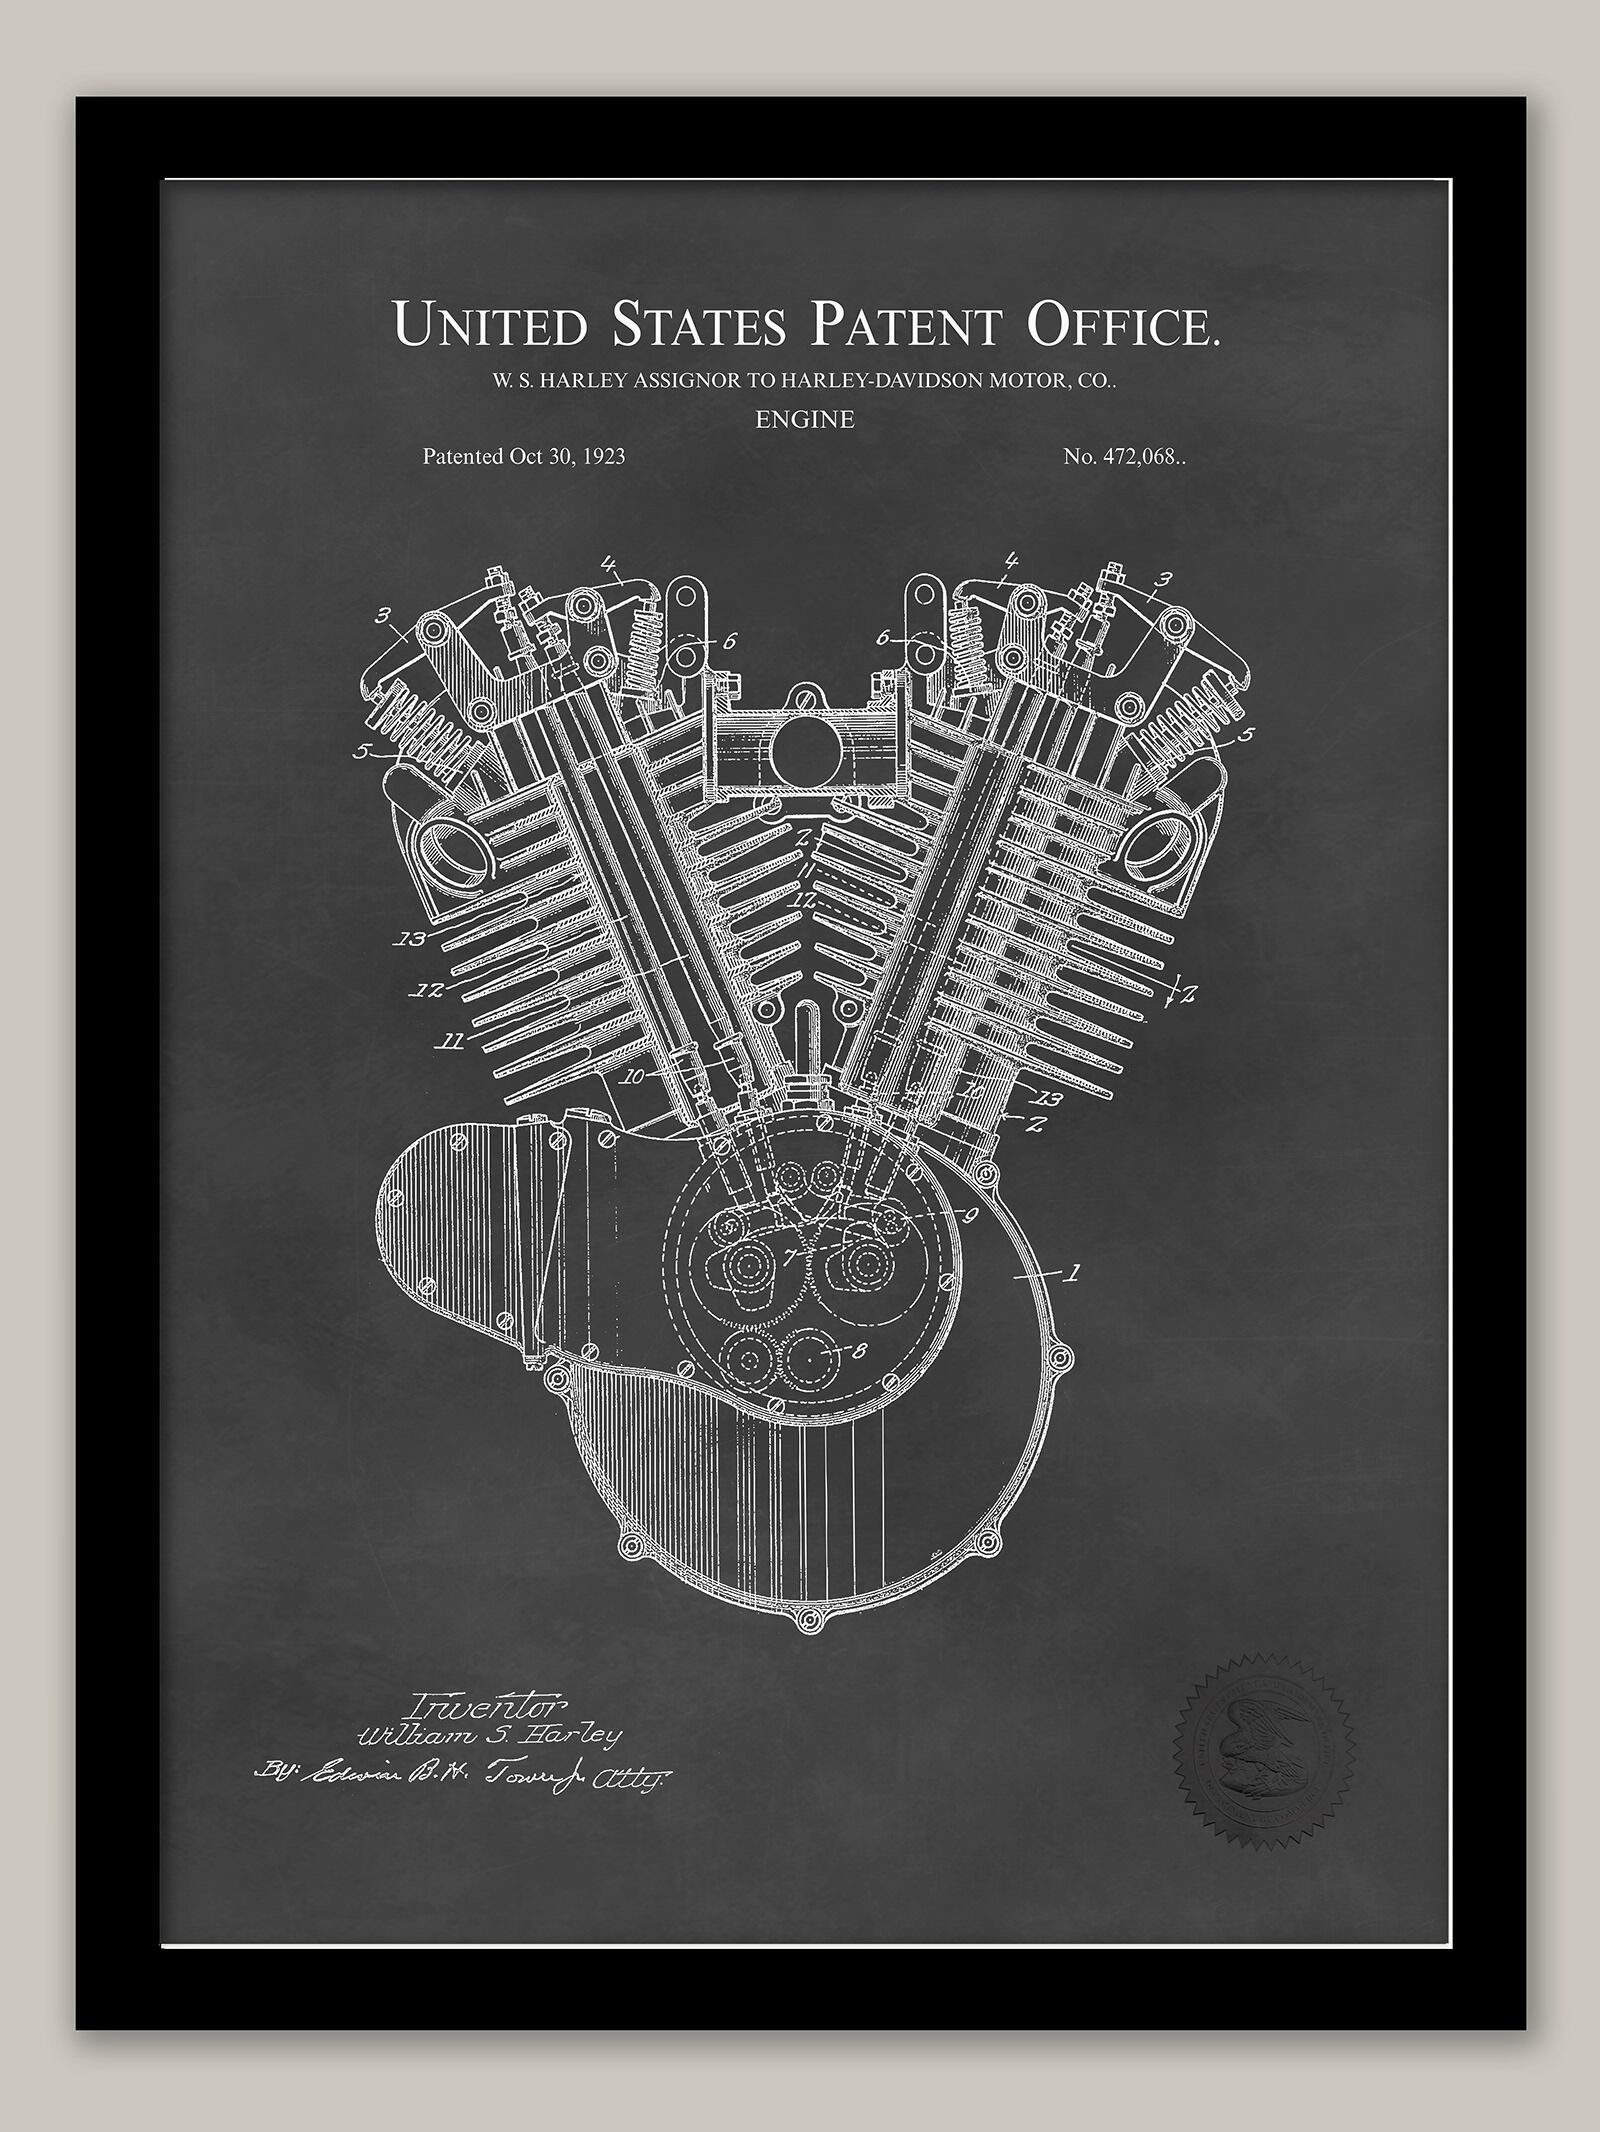 Harley-Davidson Engine | 1923 Patent